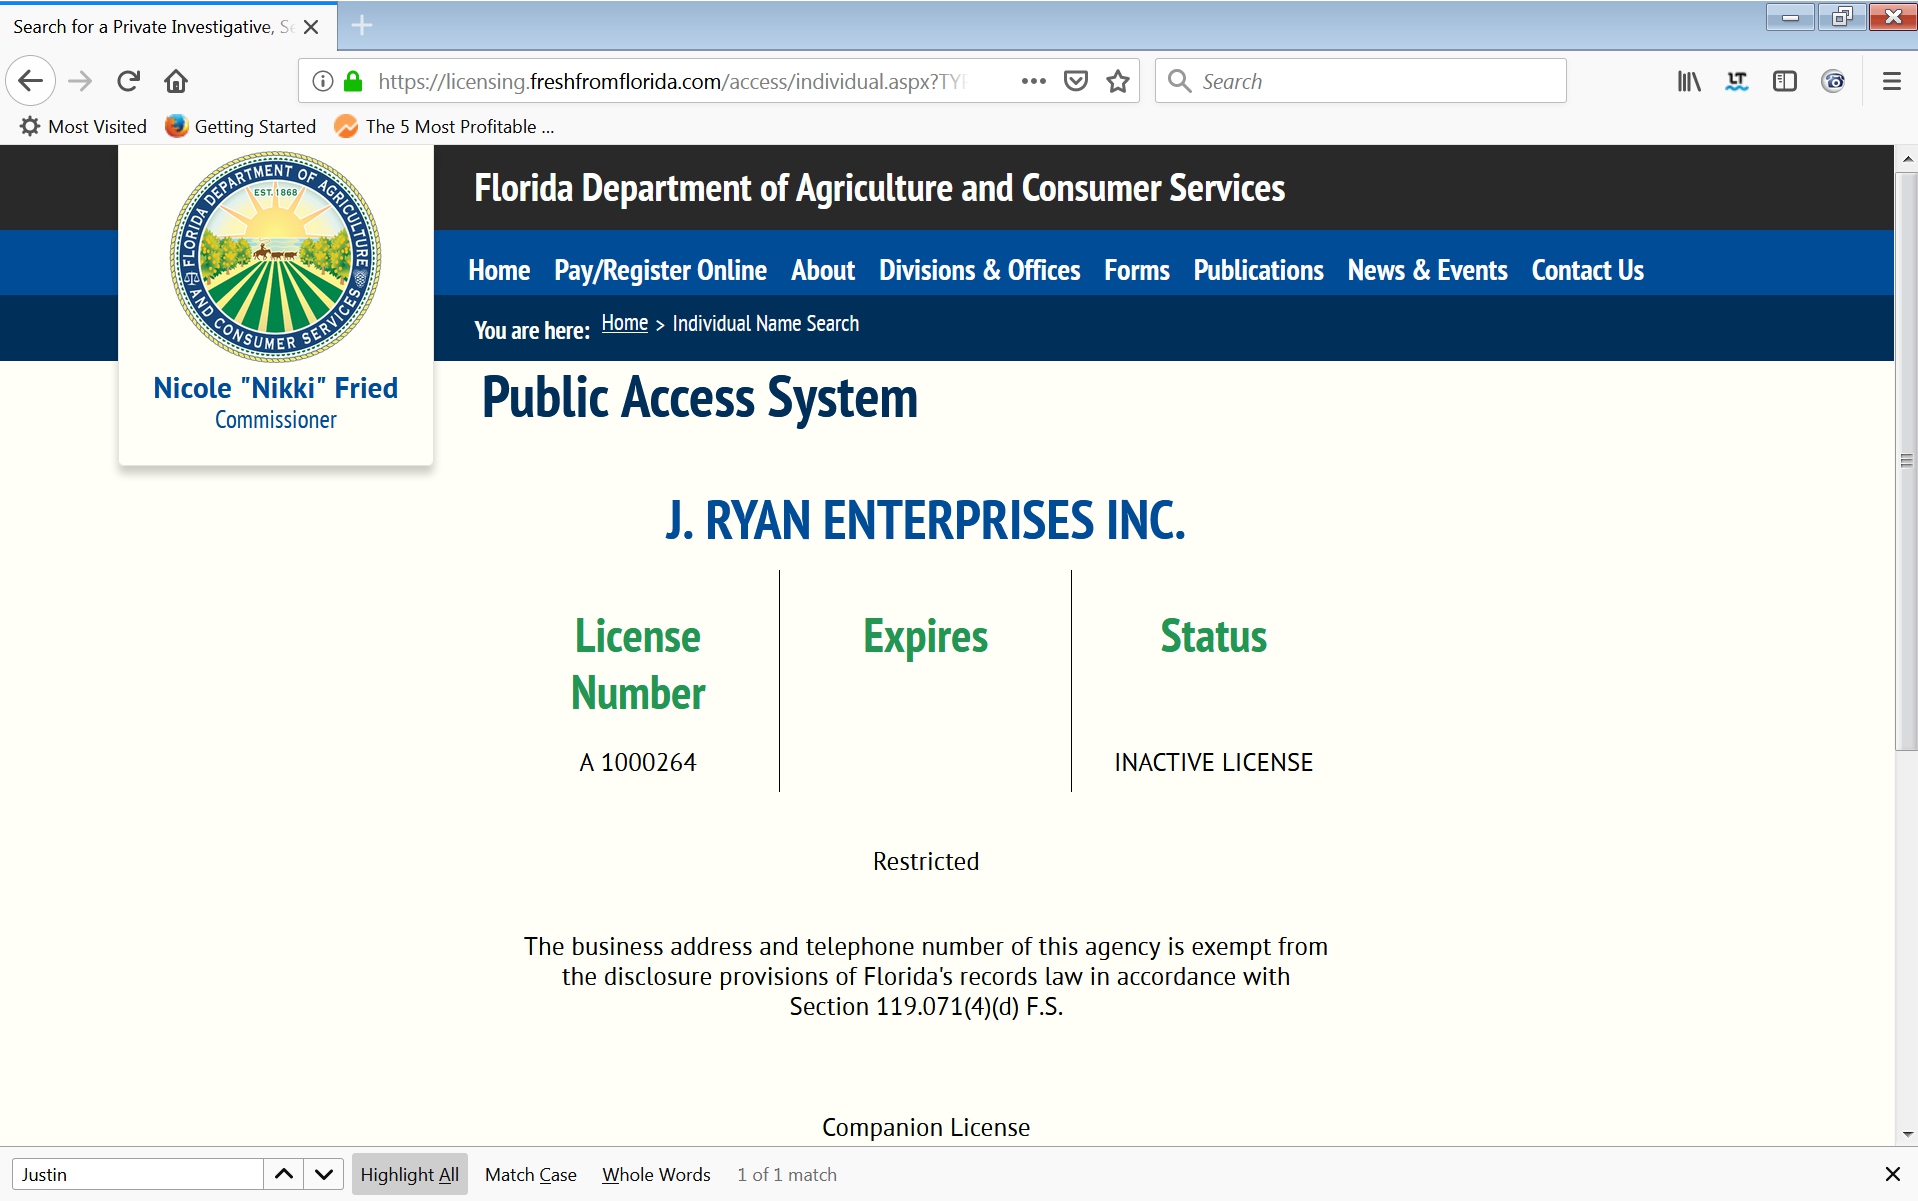 J Ryan Enterprises Inc Inactive License March 2019